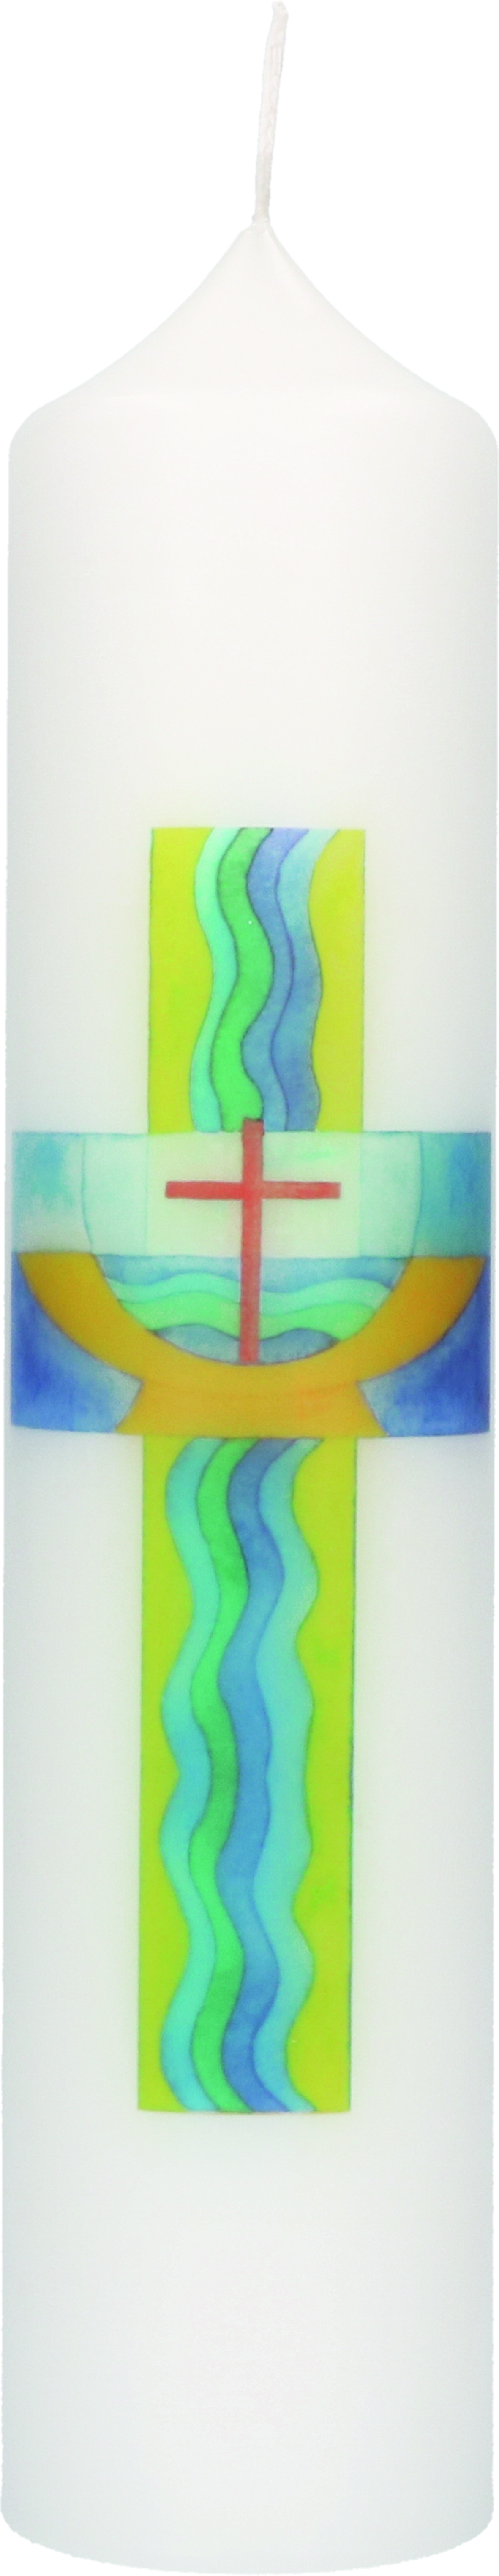 Baptism Candle with Print Motif Cross, Baptismal Font & Wave